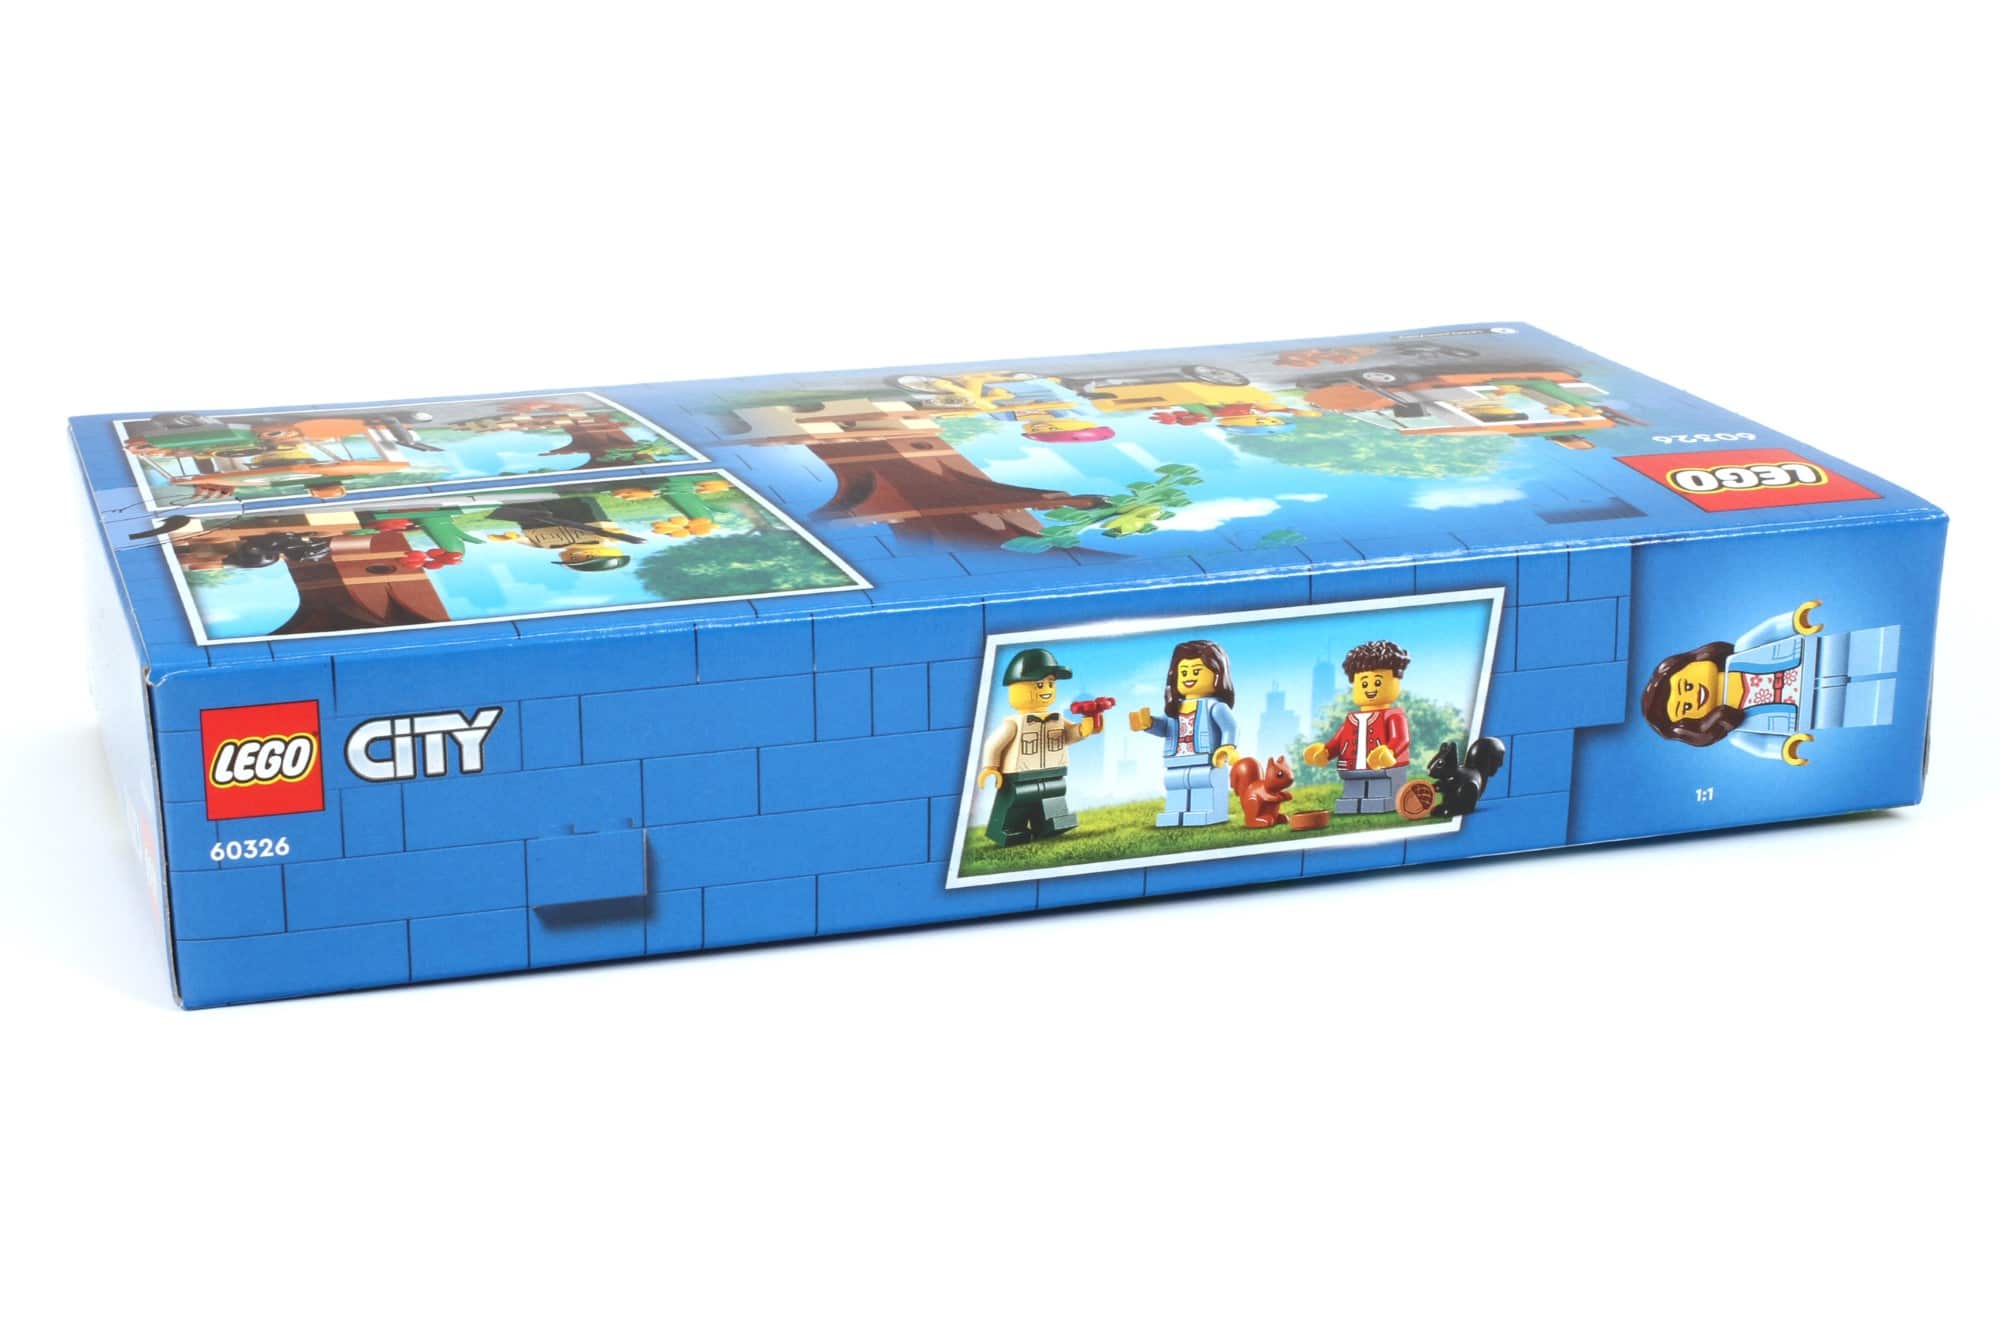 LEGO City 60326 Pciknick Im Park Review (3)